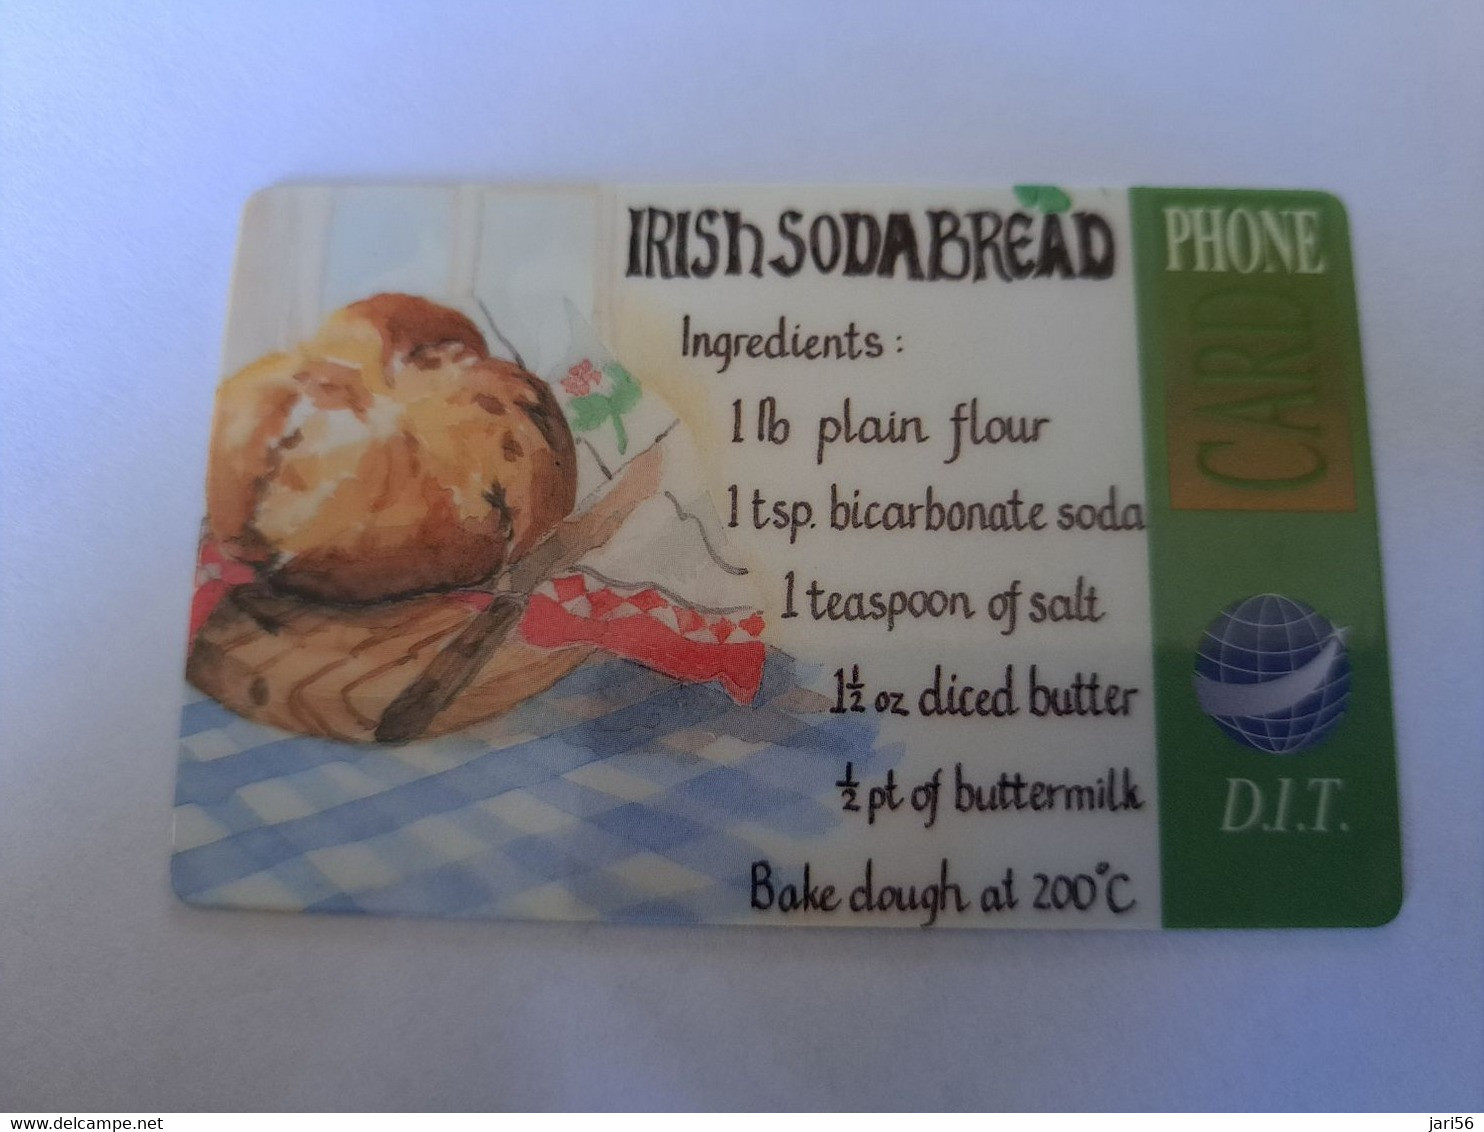 GREAT BRITAIN   2 POUND   IRISH SODA BREAD /    DIT PHONECARD    PREPAID CARD      **12123** - [10] Colecciones